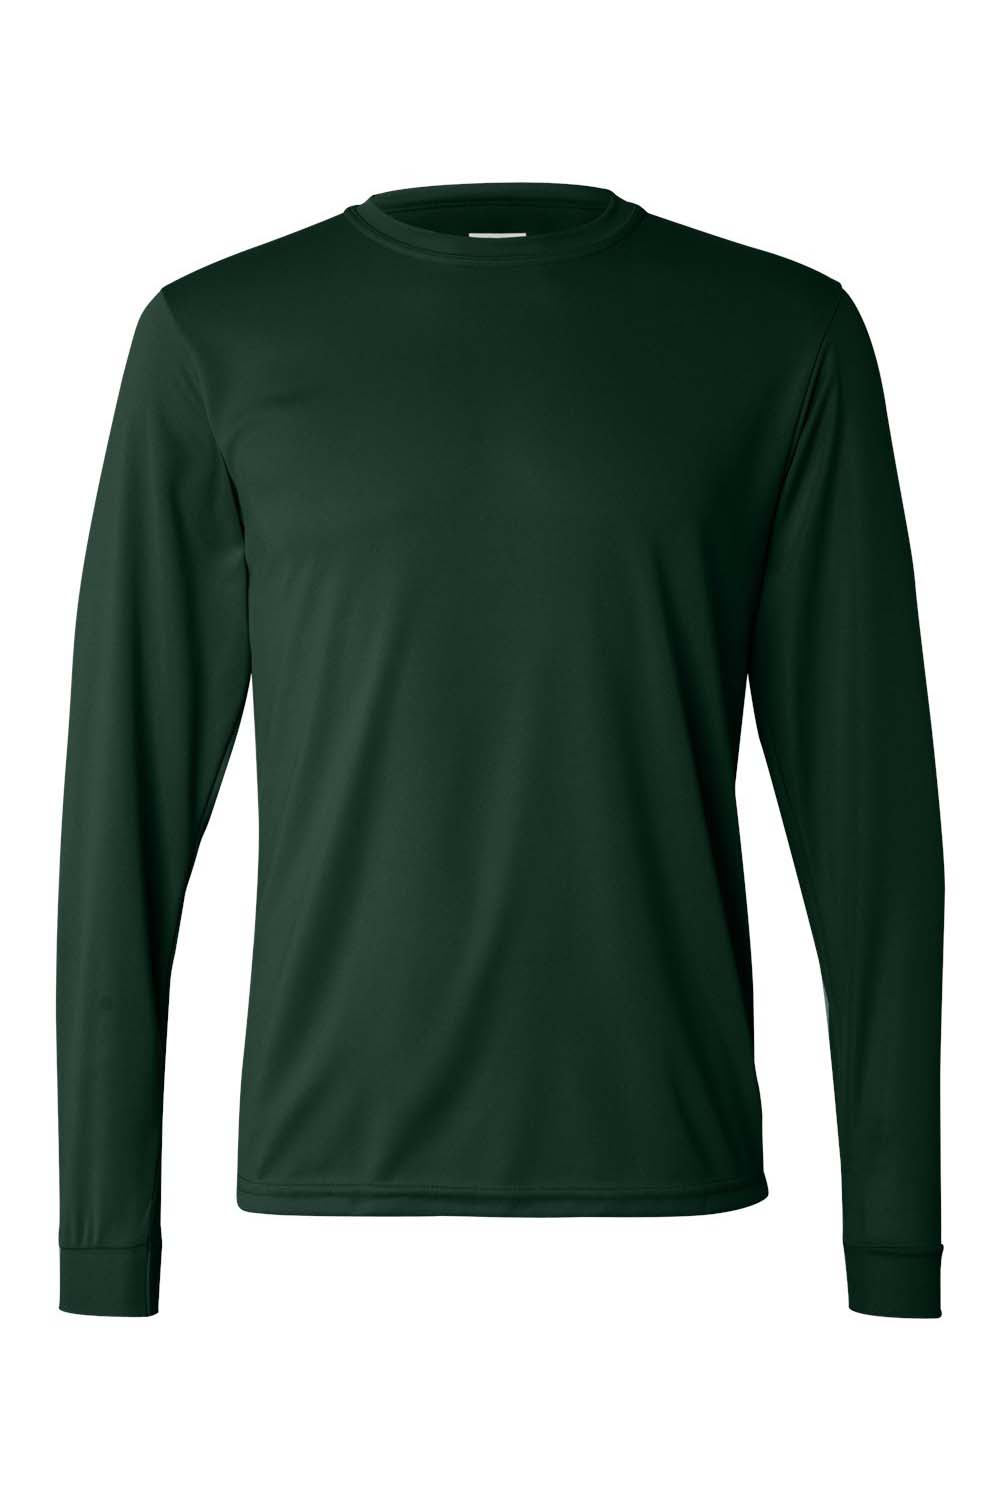 Augusta Sportswear 788 Mens Moisture Wicking Long Sleeve Crewneck T-Shirt Dark Green Model Flat Front